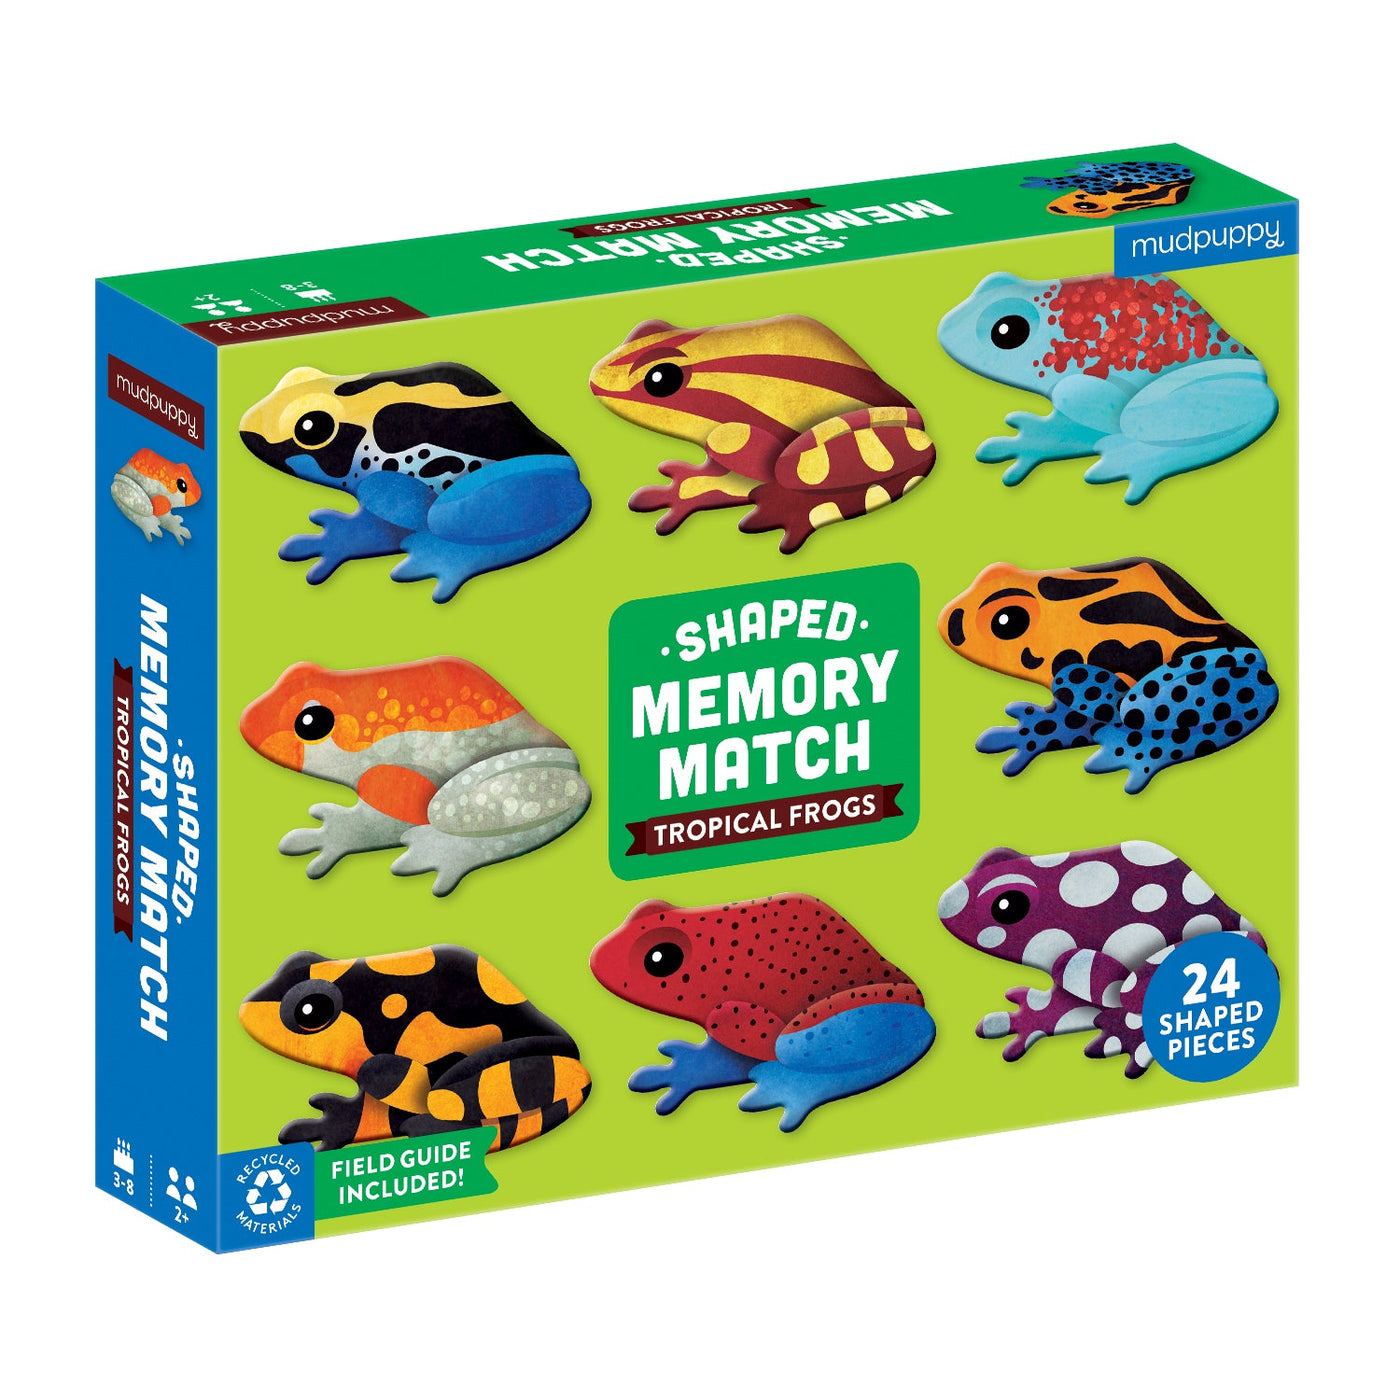 Mudpuppy Shaped Memory Match - Tropical Frogs Educational Toy Mudpuppy 